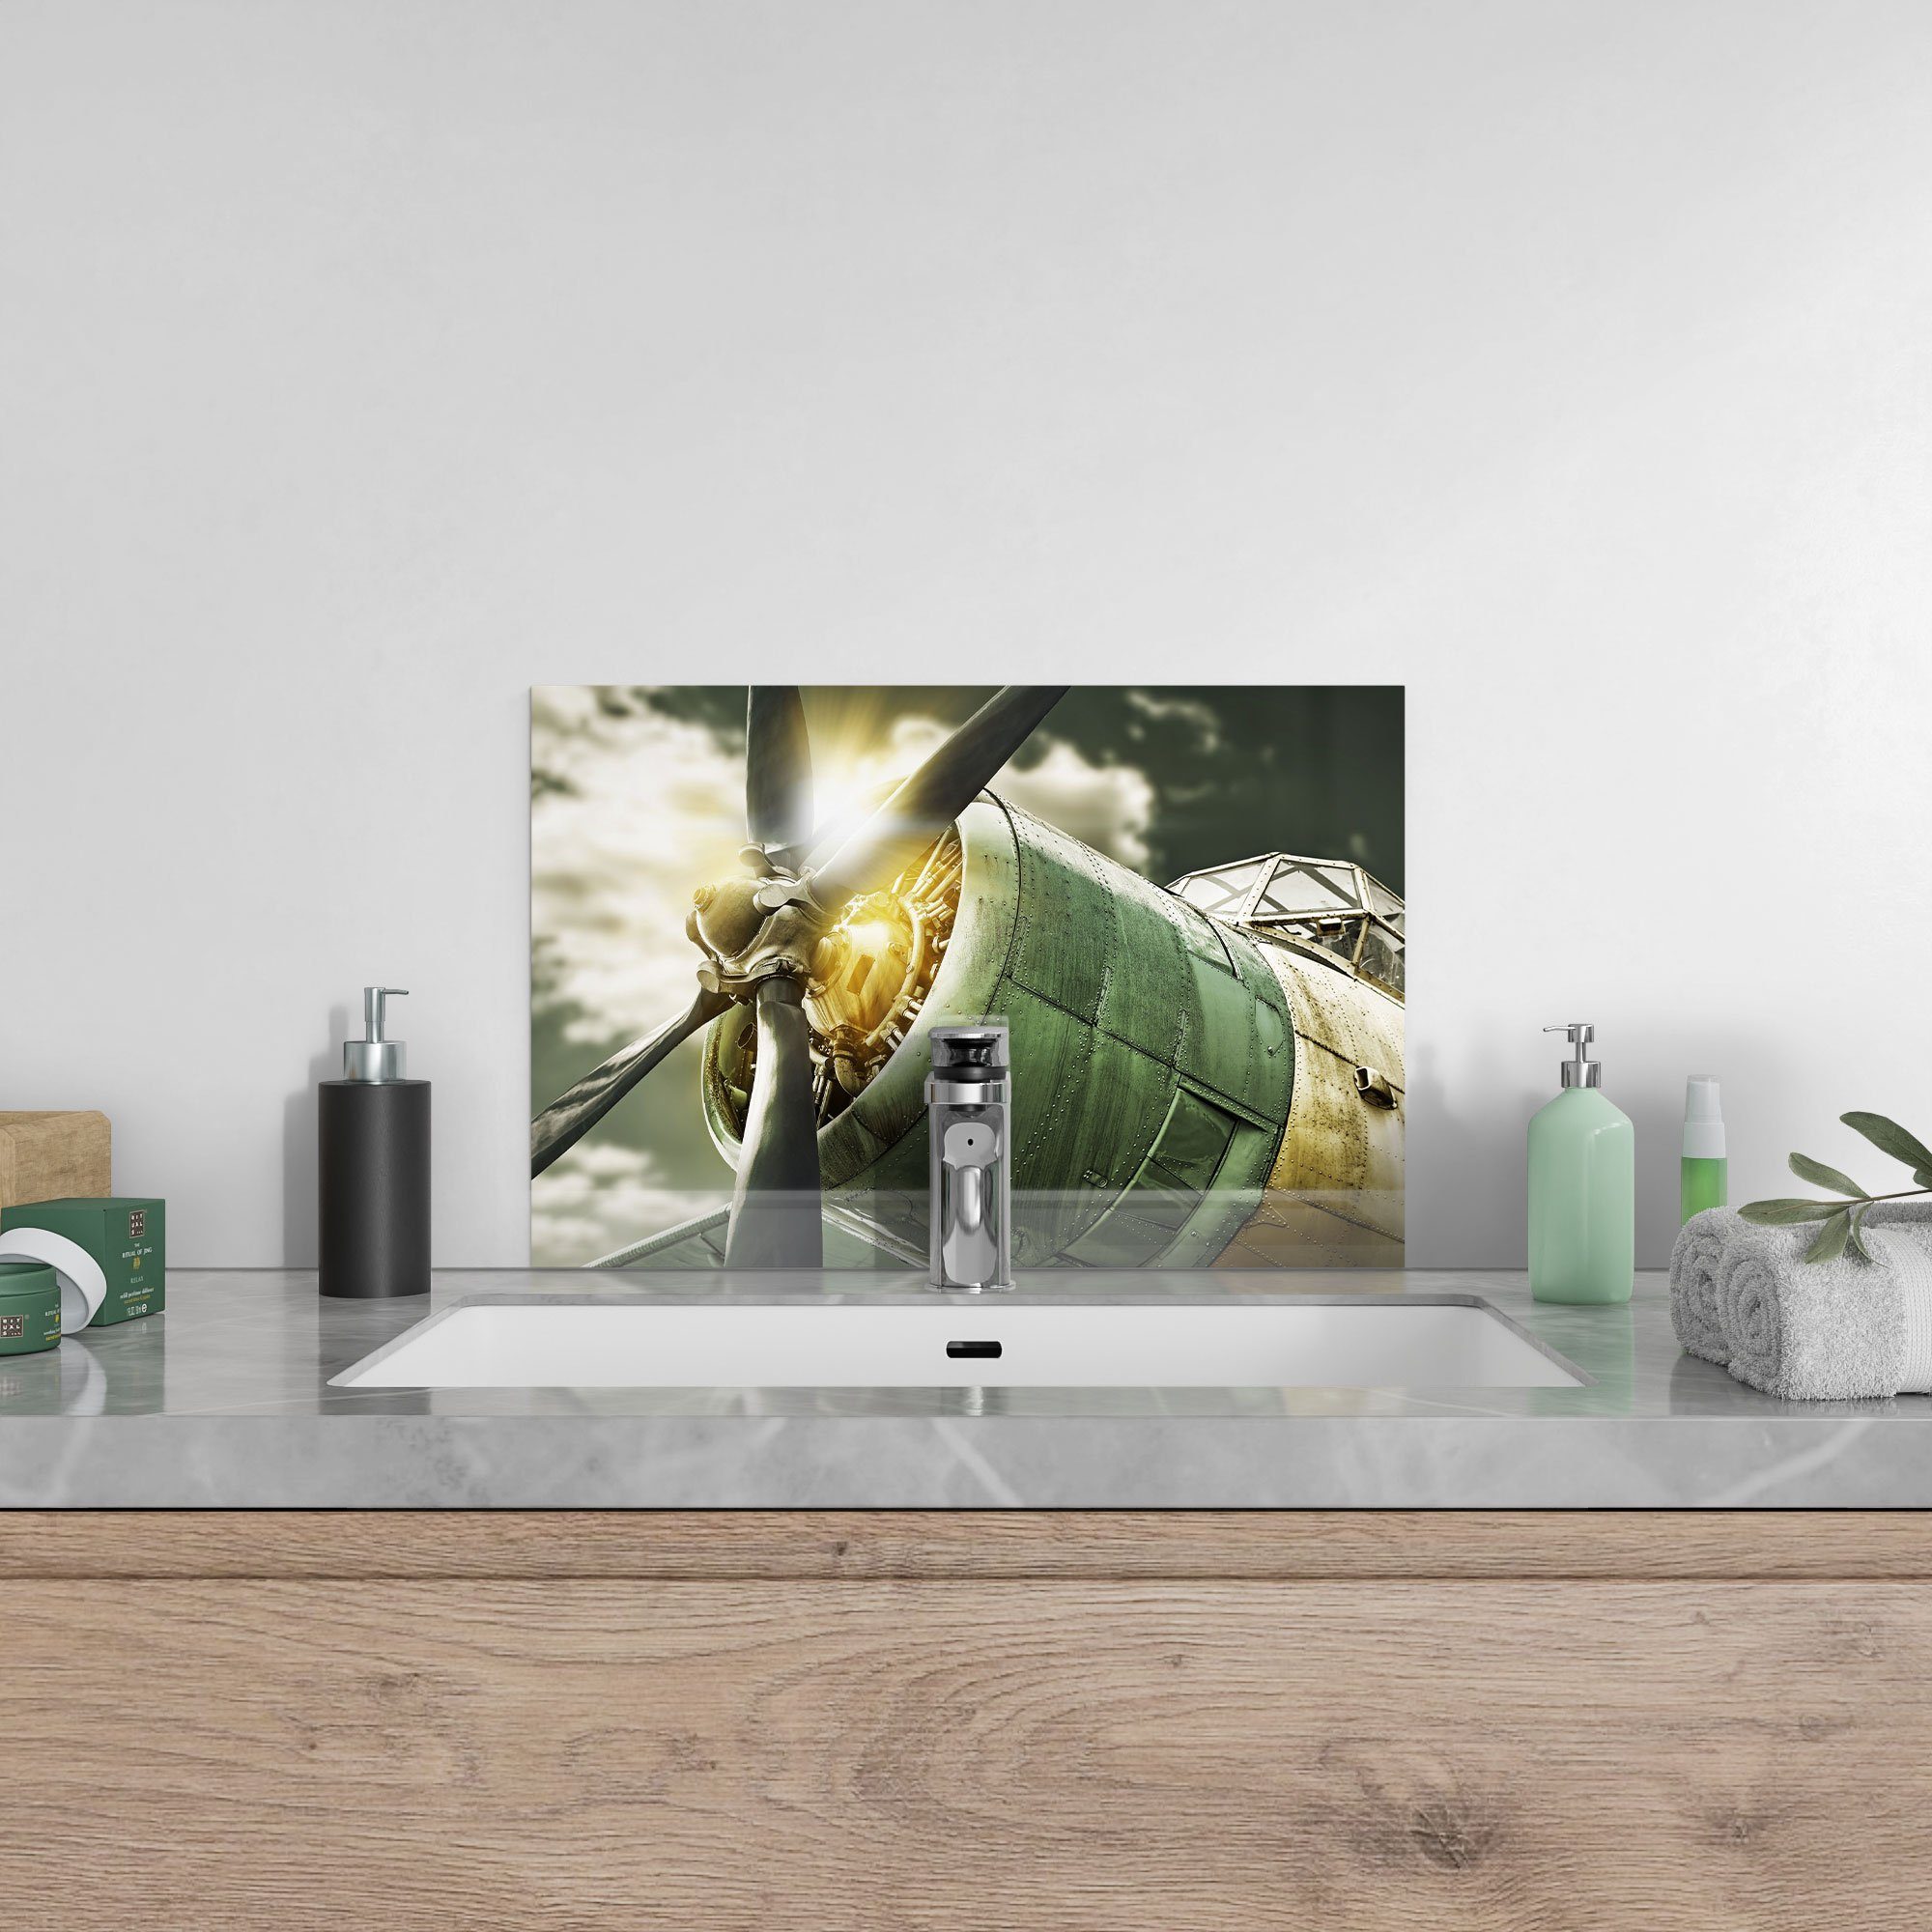 'Propellerflugzeug DEQORI Glas nah', Badrückwand Herdblende Spritzschutz Küchenrückwand